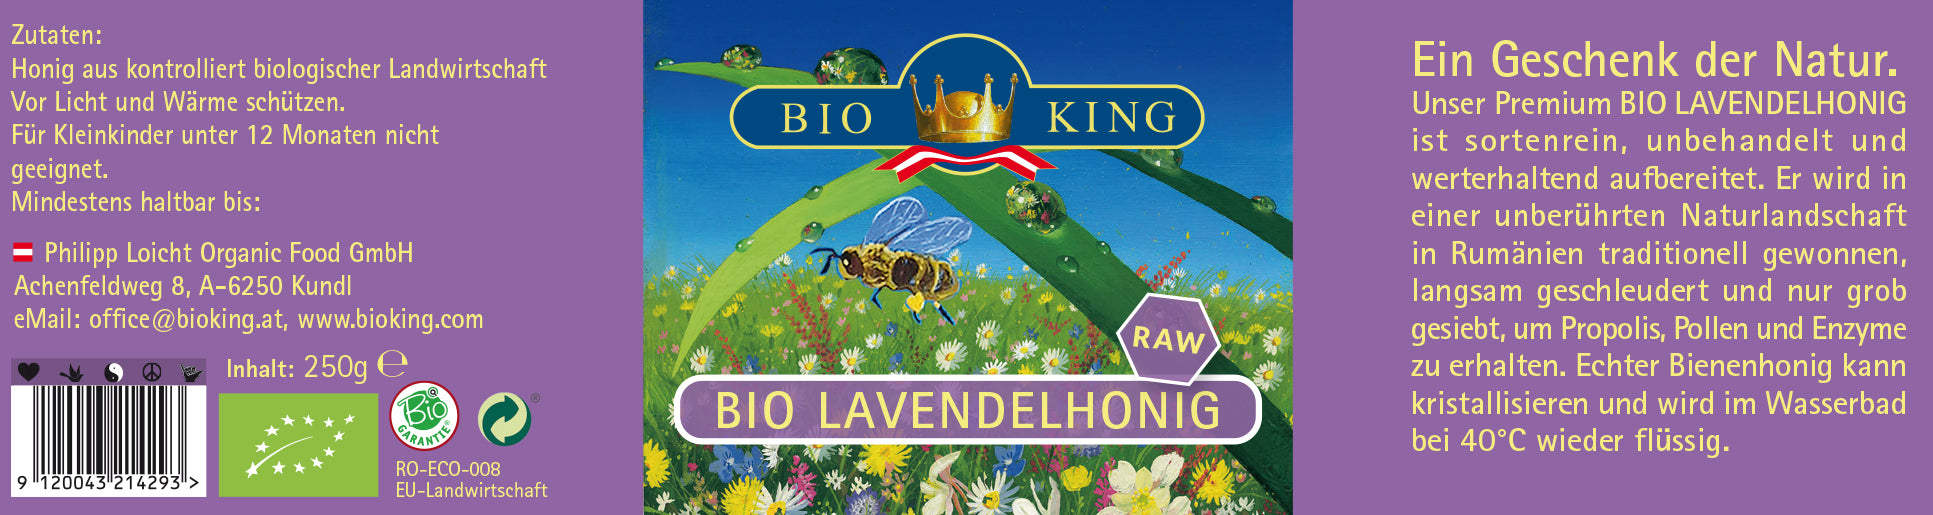 Bio Lavendelhonig